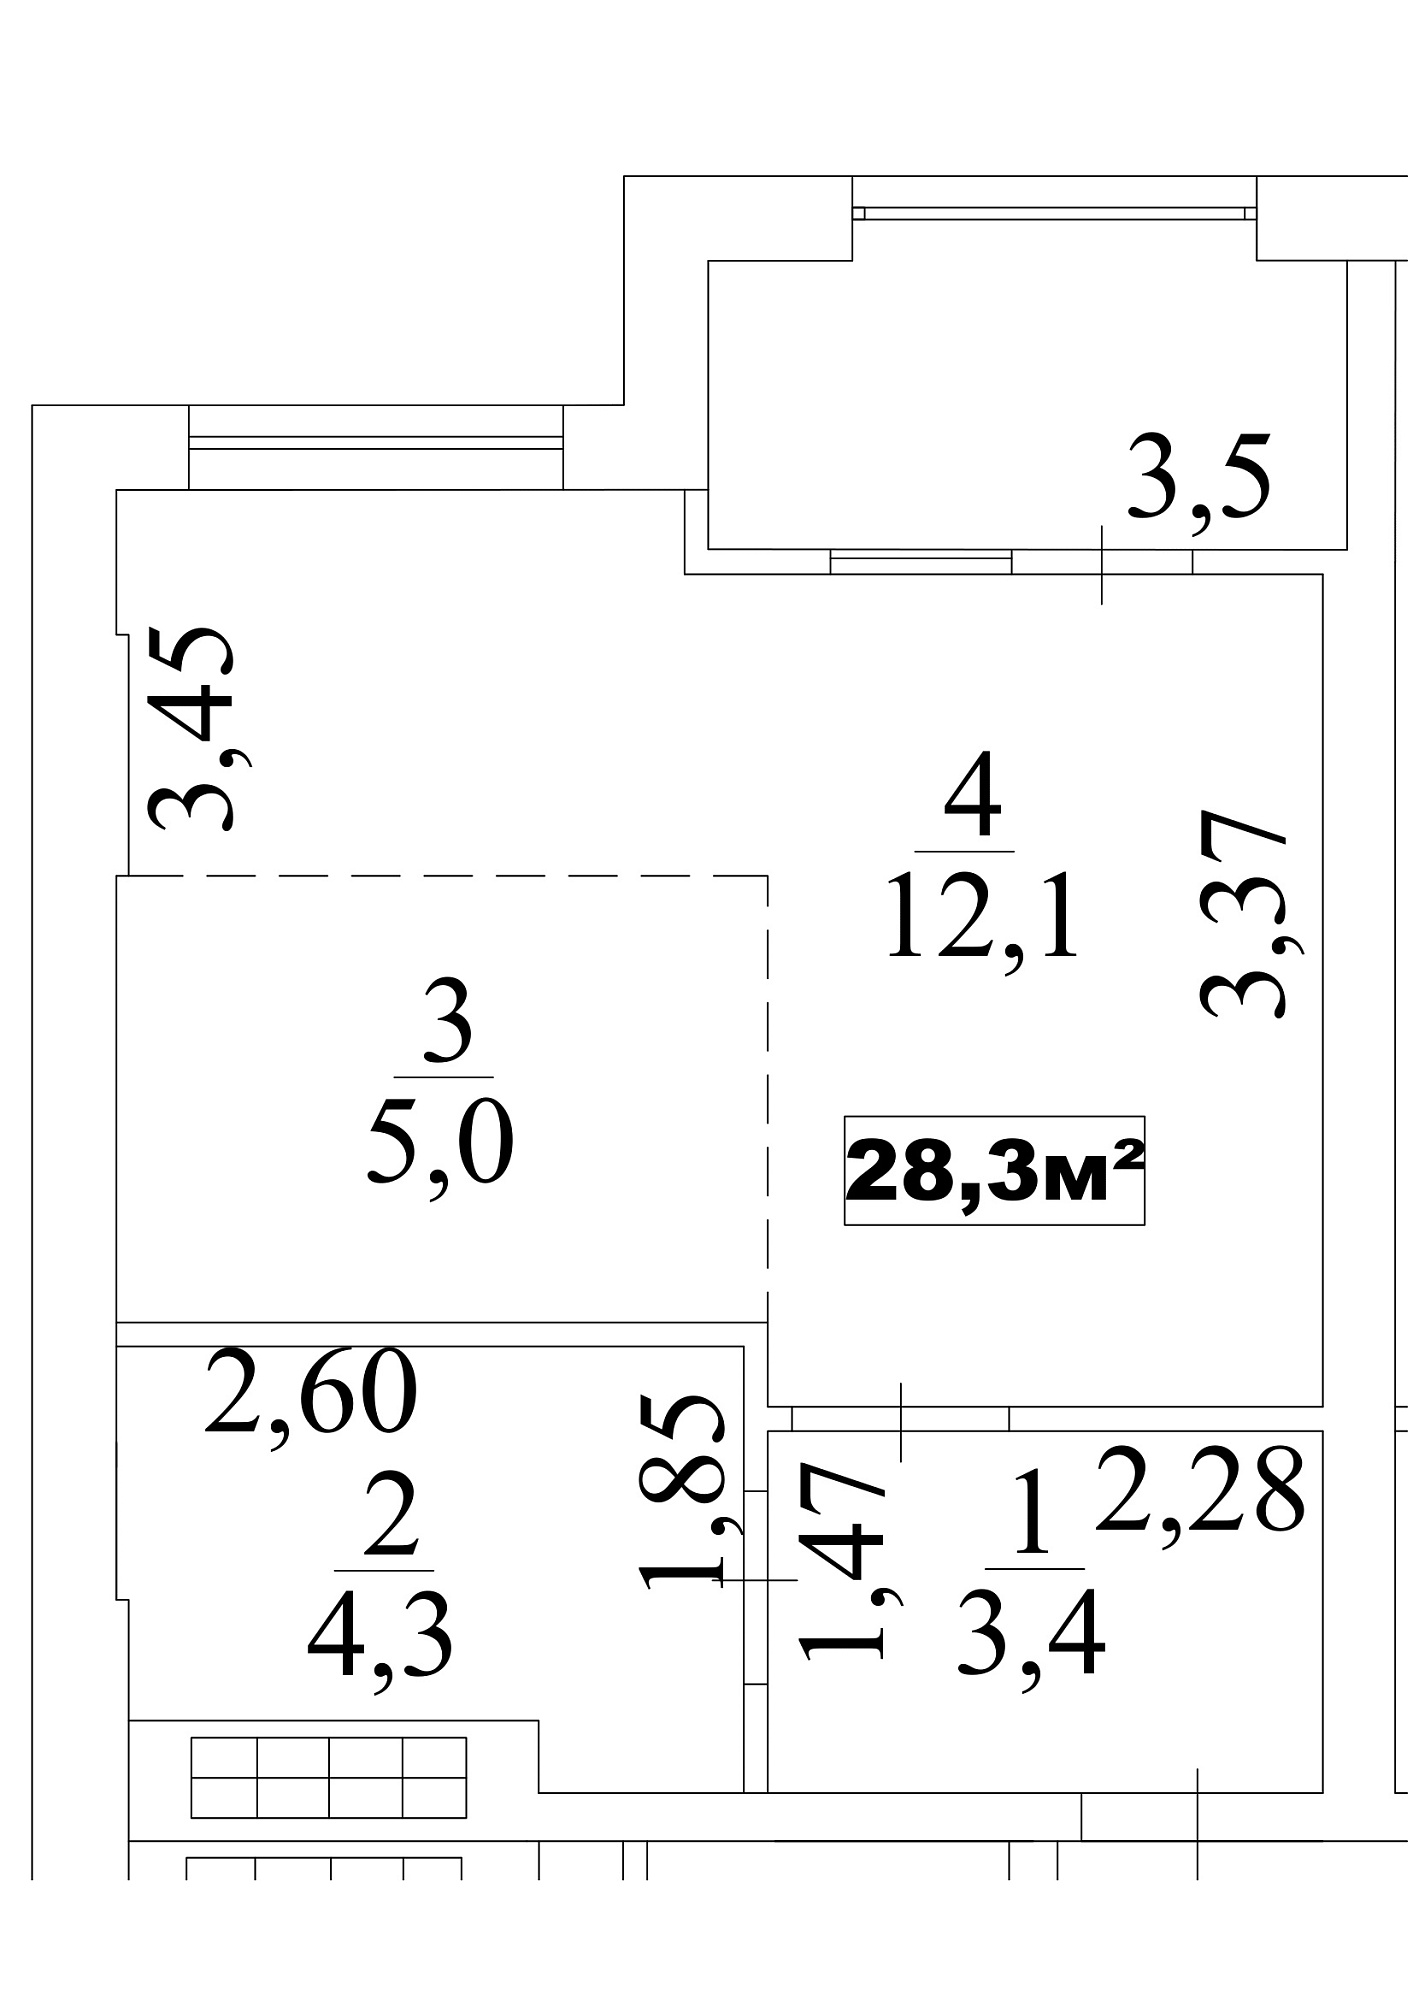 Планировка Smart-квартира площей 28.3м2, AB-10-08/0066б.